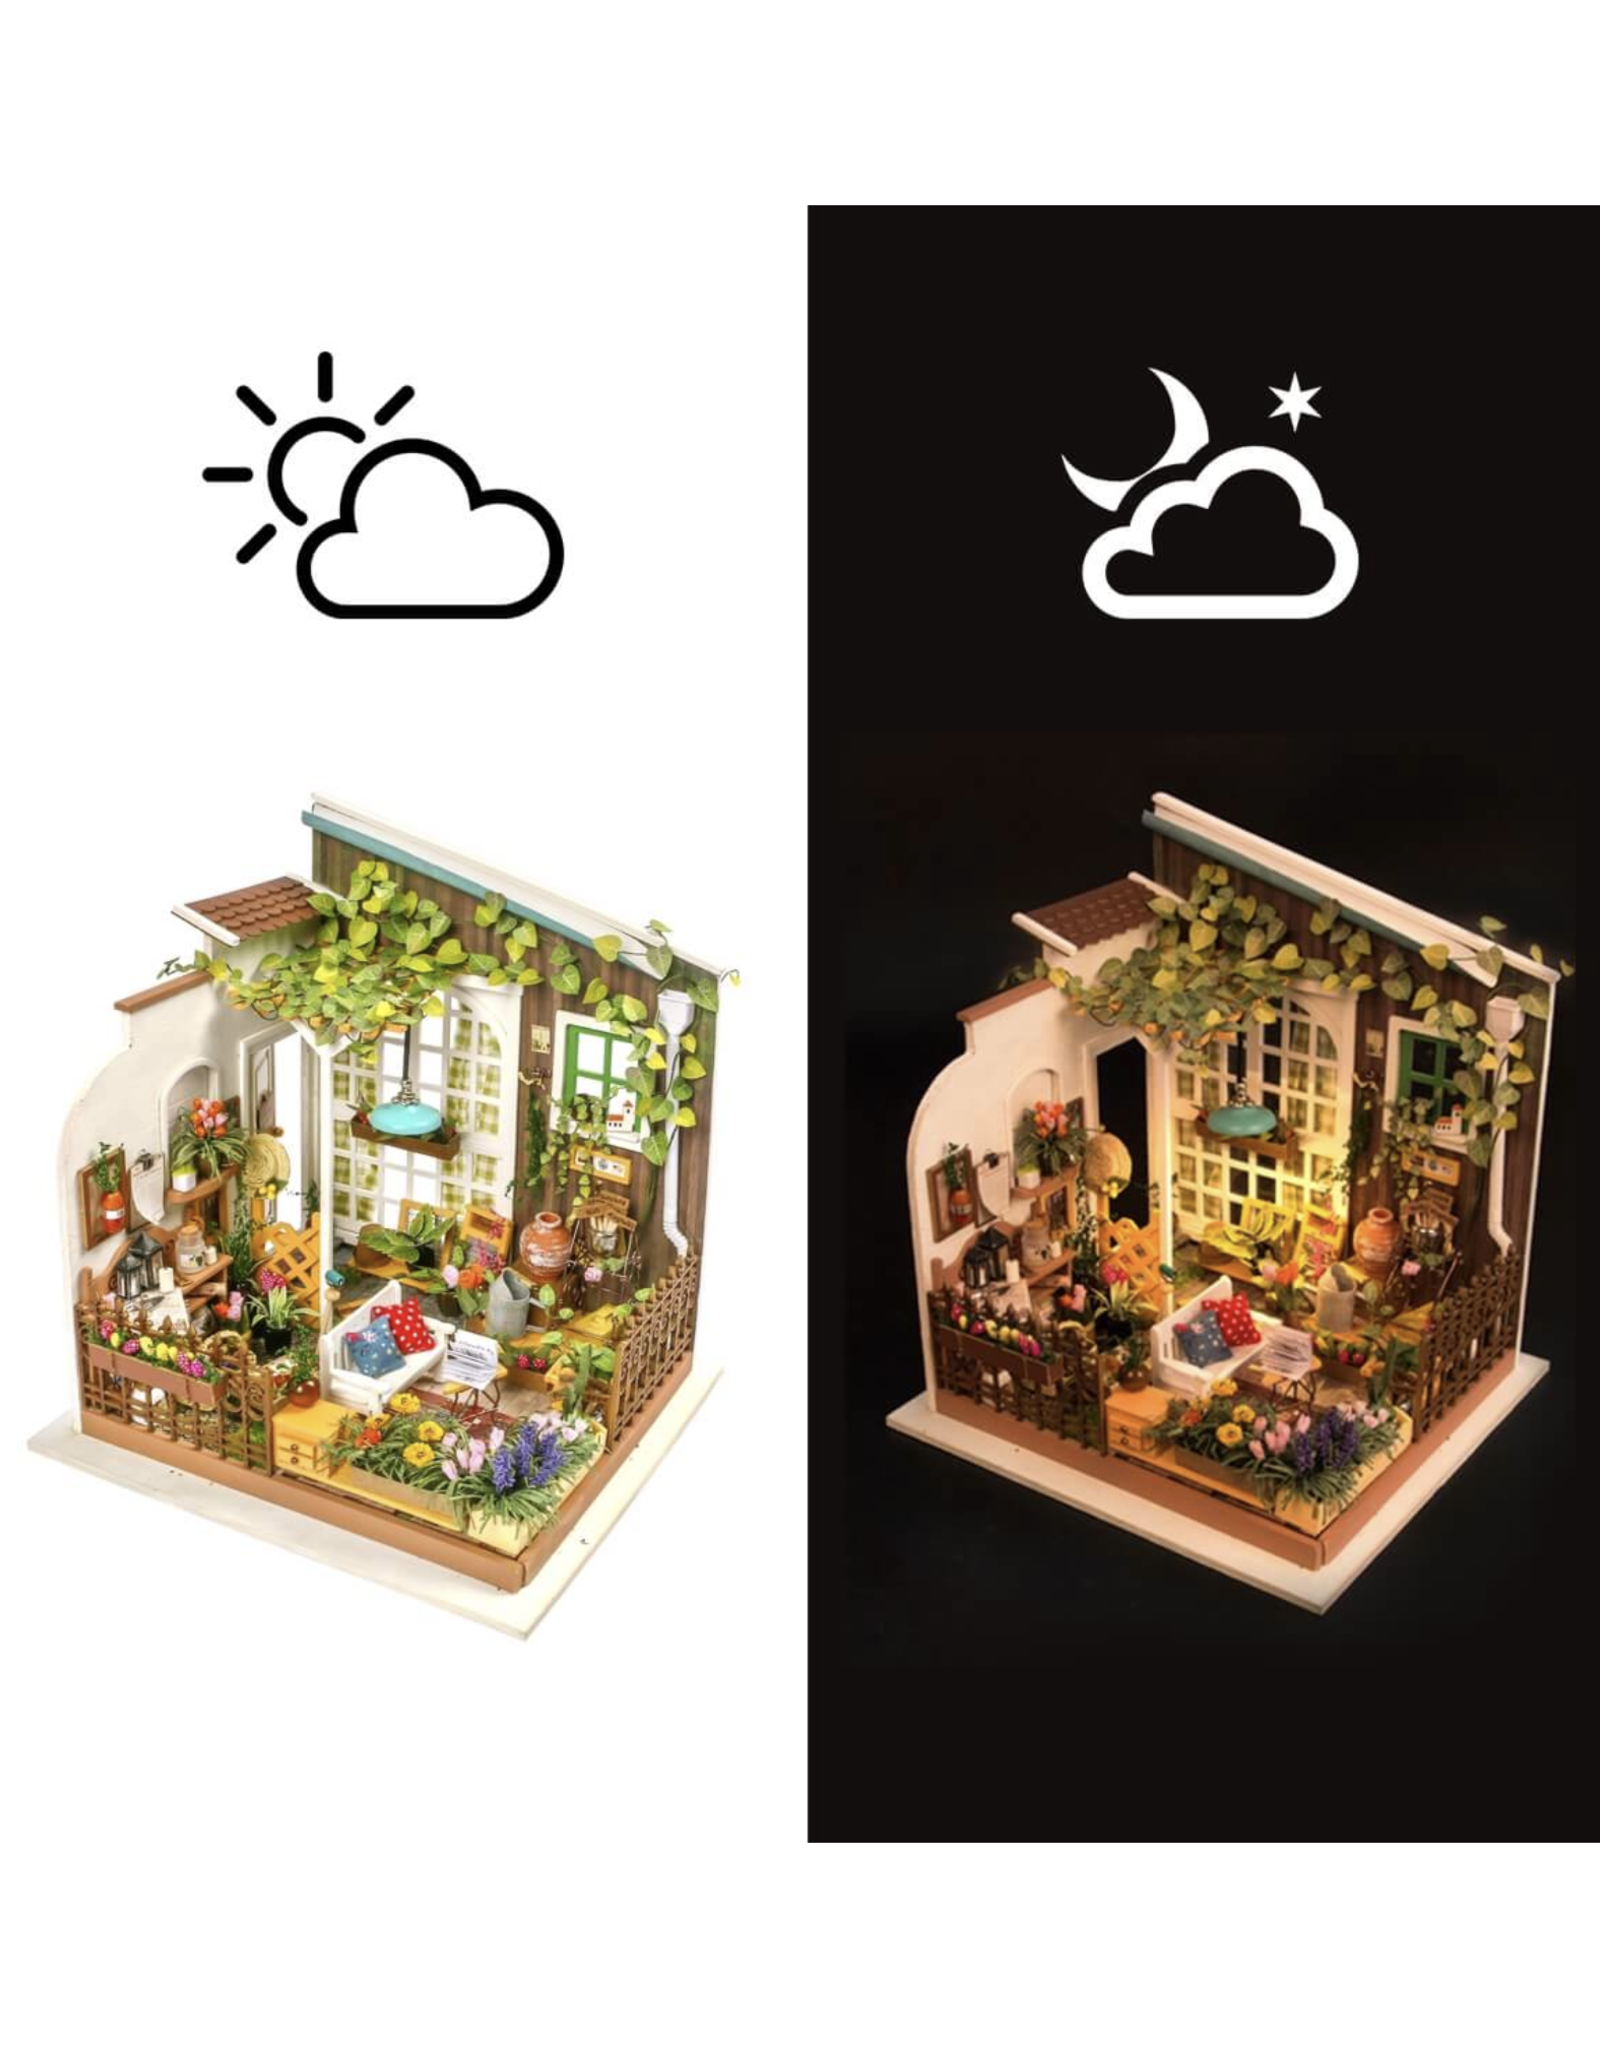 DIY Miniature House Kit : Miller's Garden